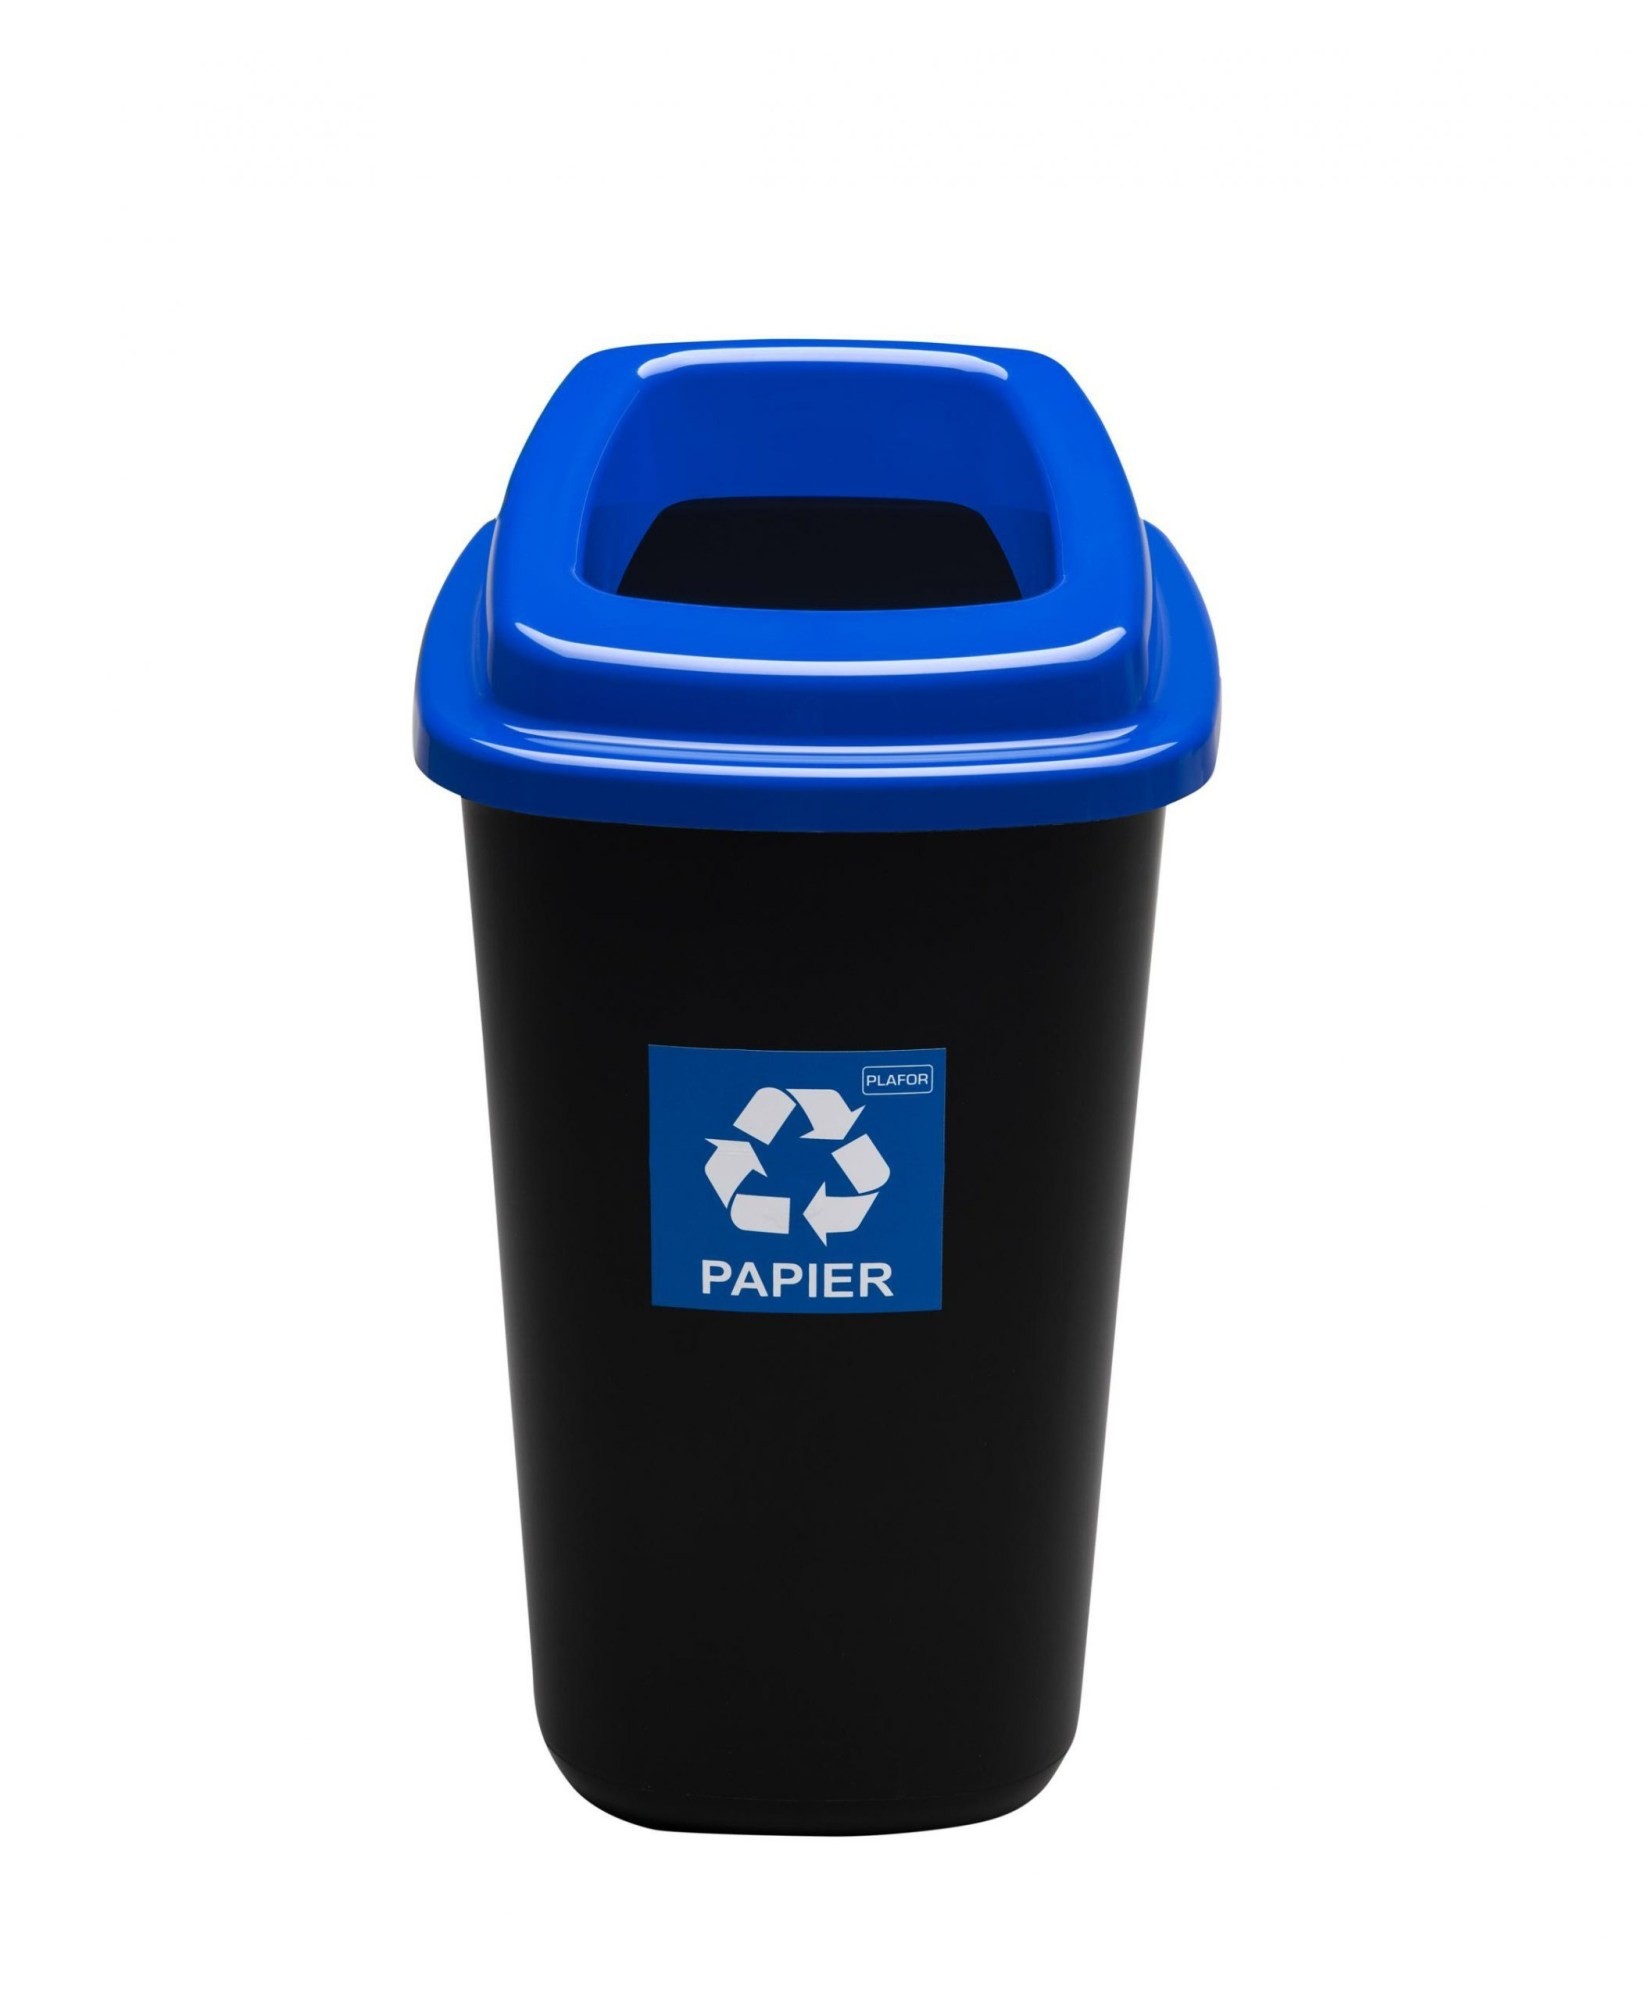 Cos plastic reciclare selectiva, capacitate 45l, PLAFOR Sort - negru cu capac albastru - hartie